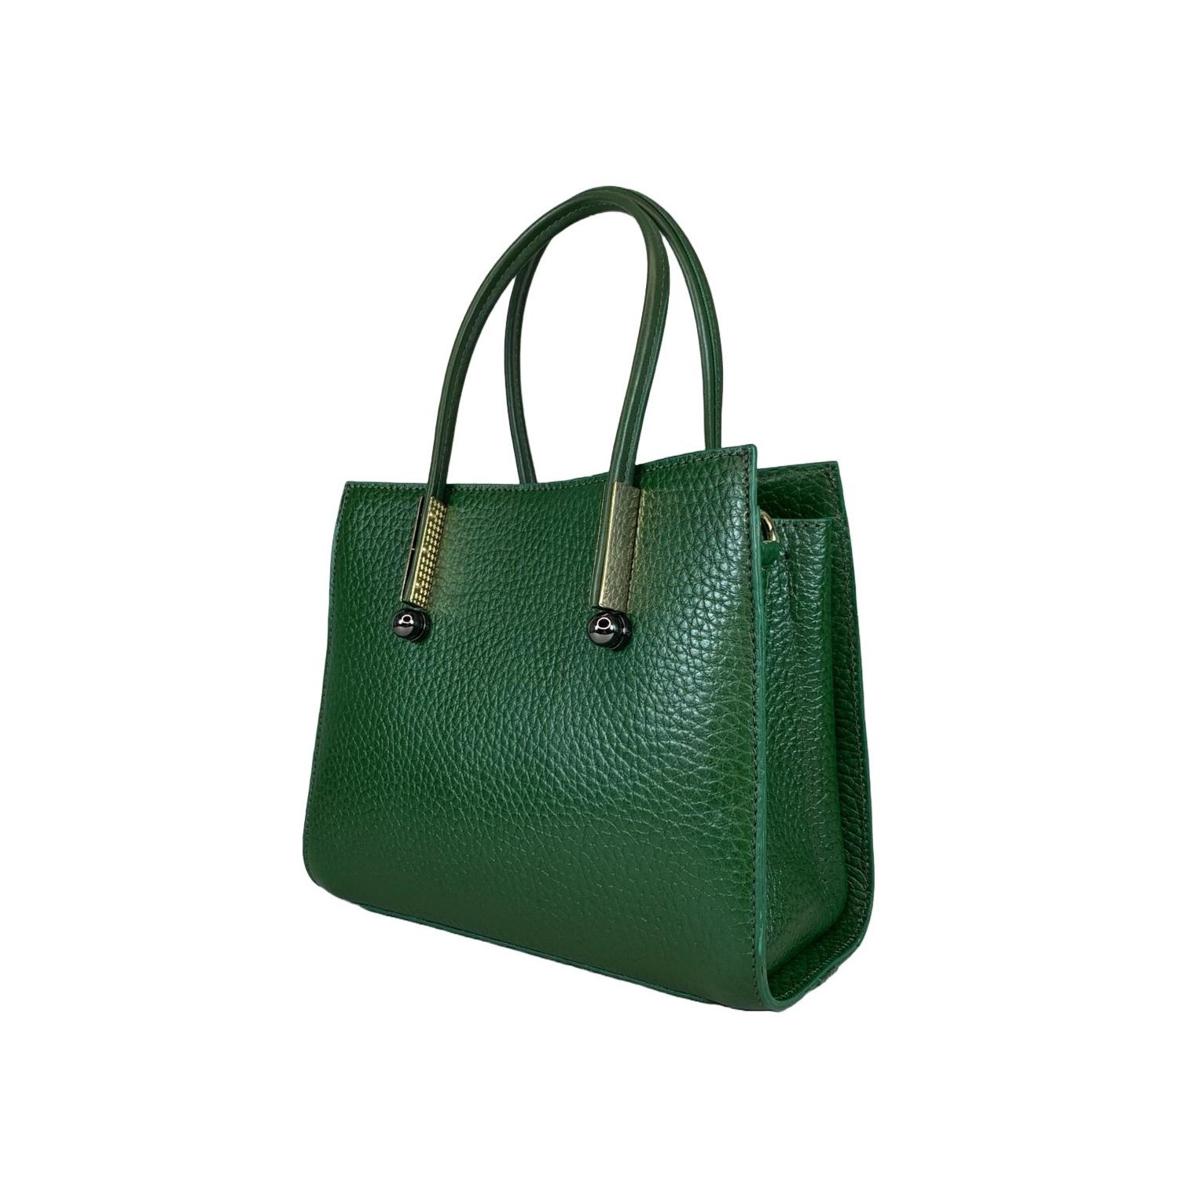 LeatherLuxe - Green Women's Leather Handbag; Shoulder Bag; Crossbody Genuine leather Designer Premium leather bag for women leather hobo tote messenger bag Leather Accessories Leather Shop Leather Goods